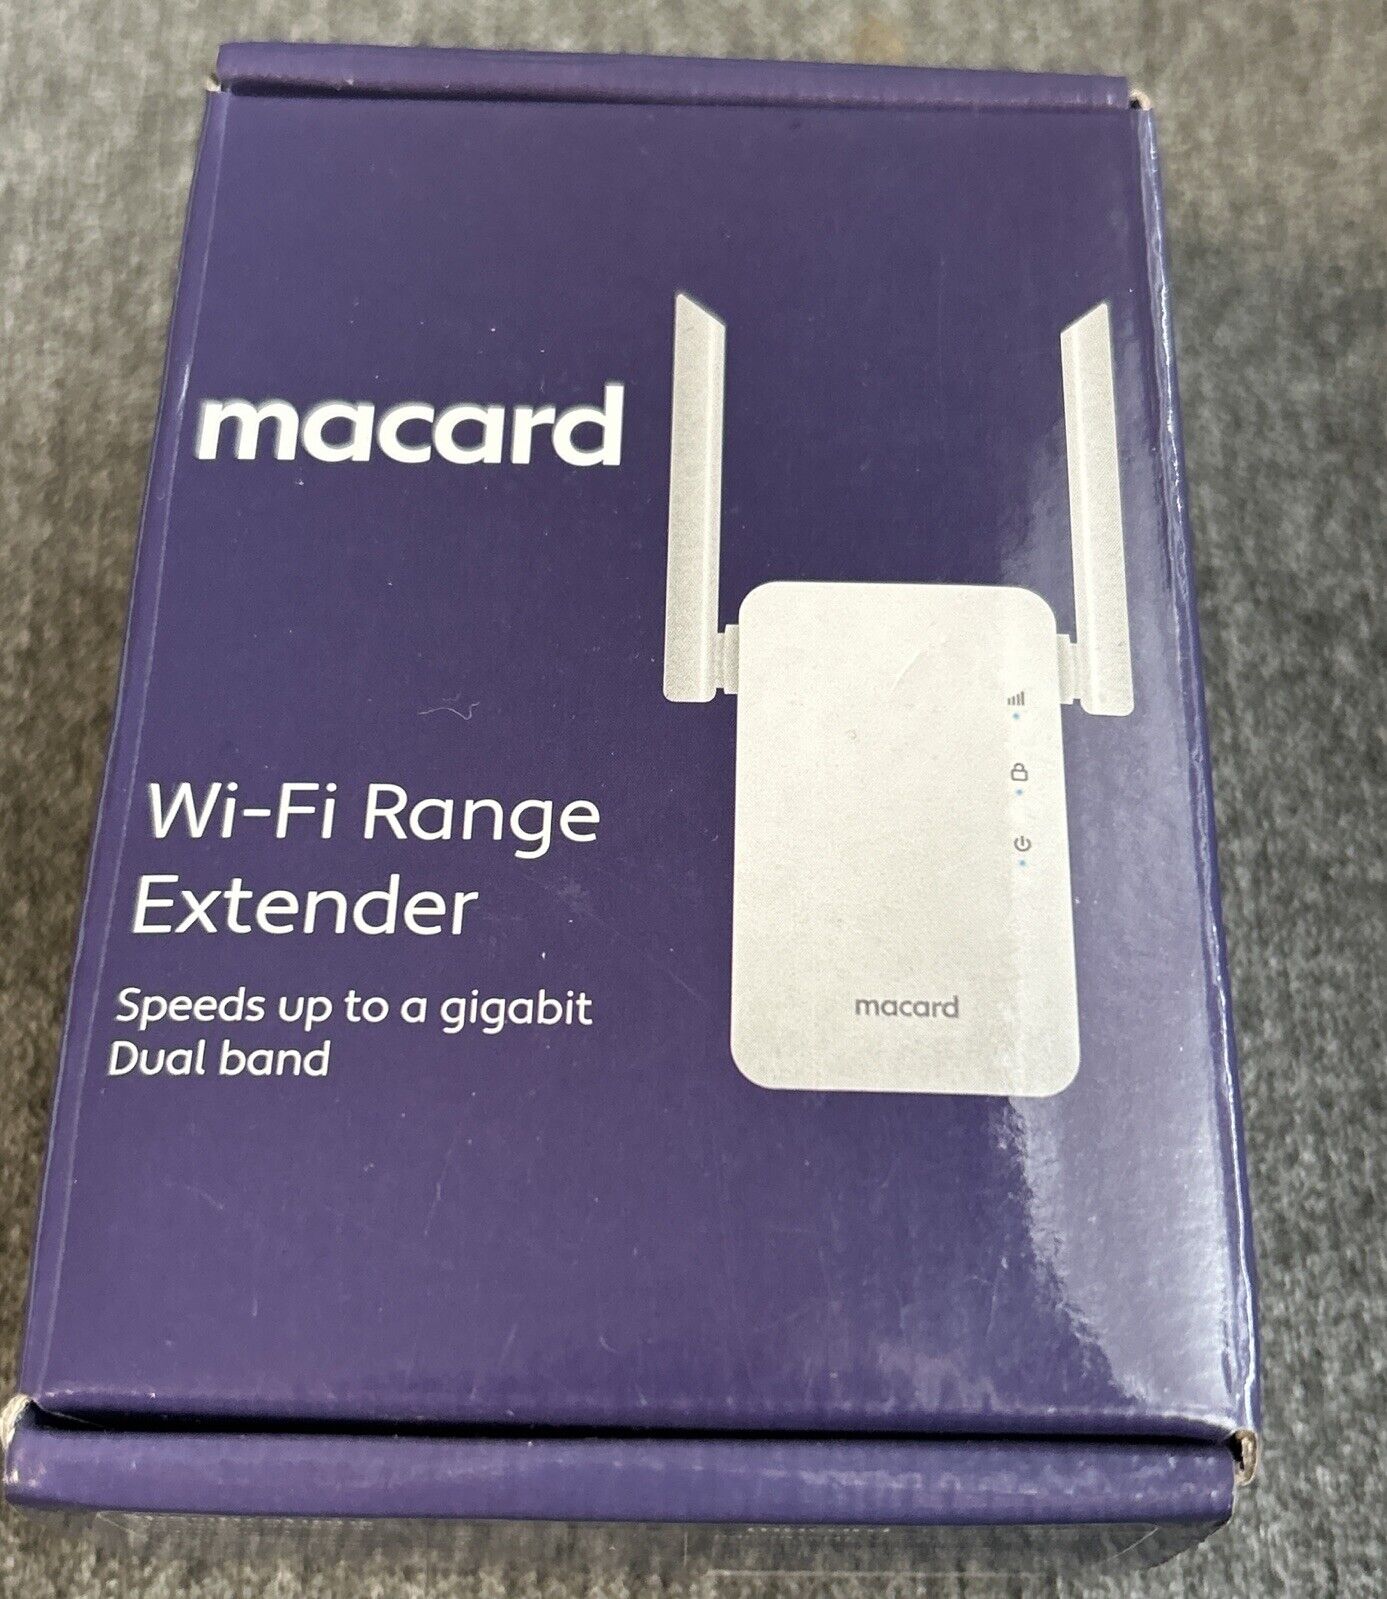 Macard wi-fi Range Extender - speeds up to a gigabit/dual band